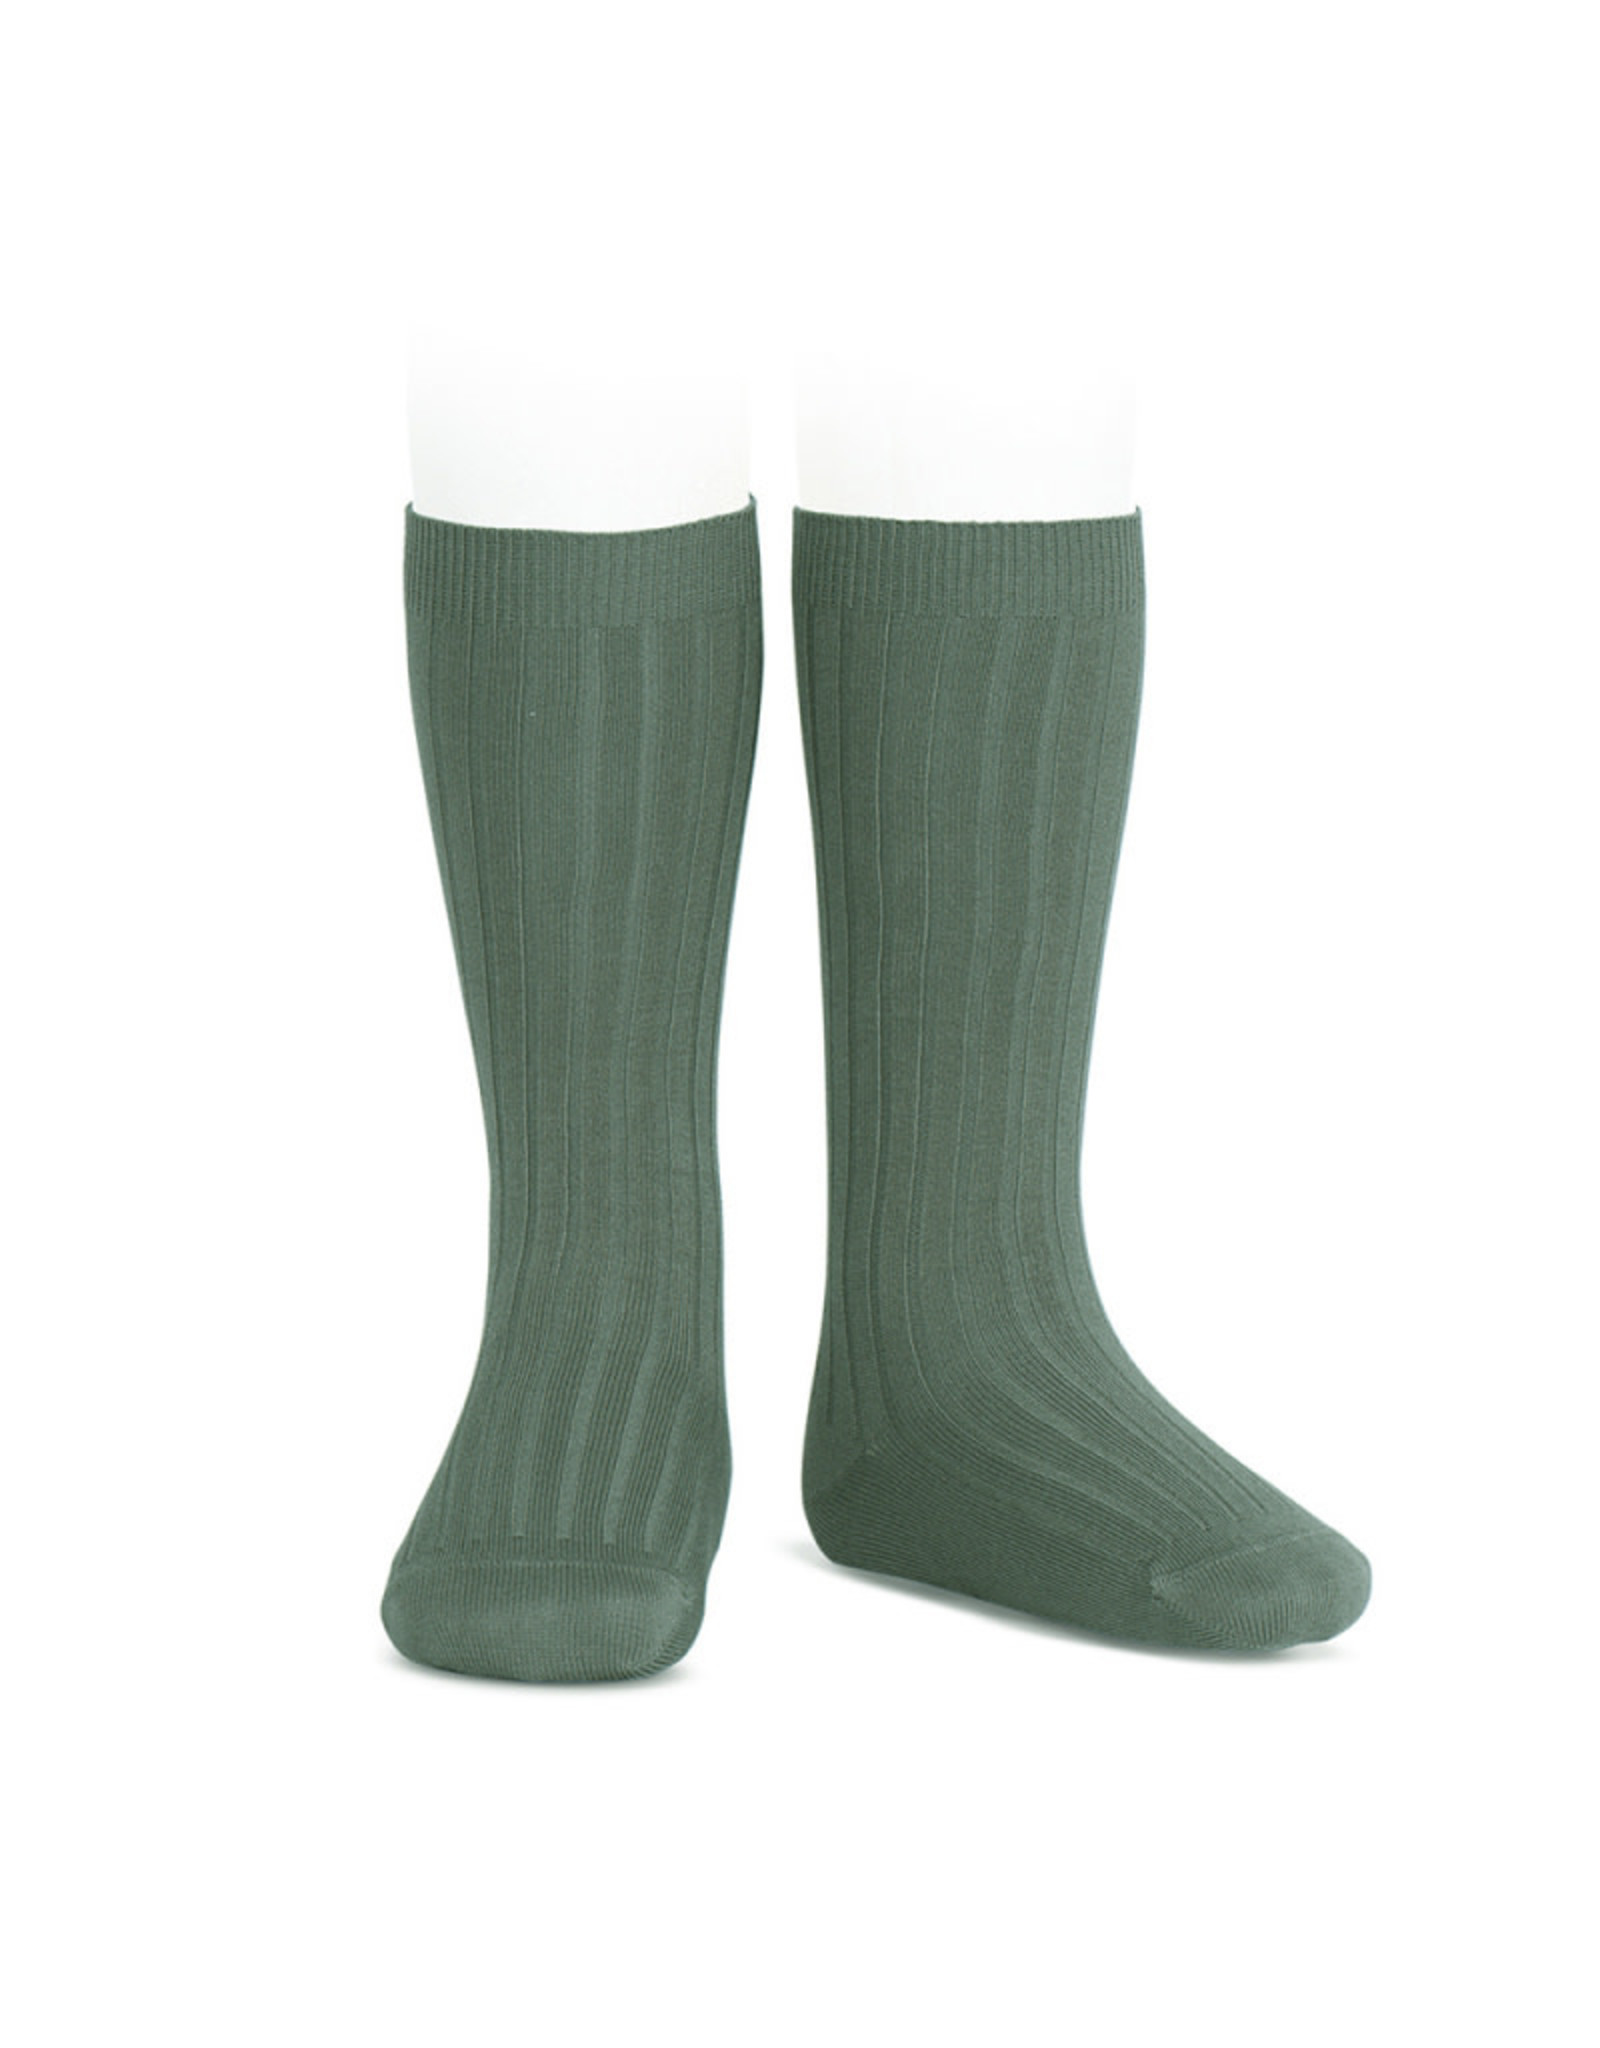 CONDOR Lichen Green Ribbed Knee Socks